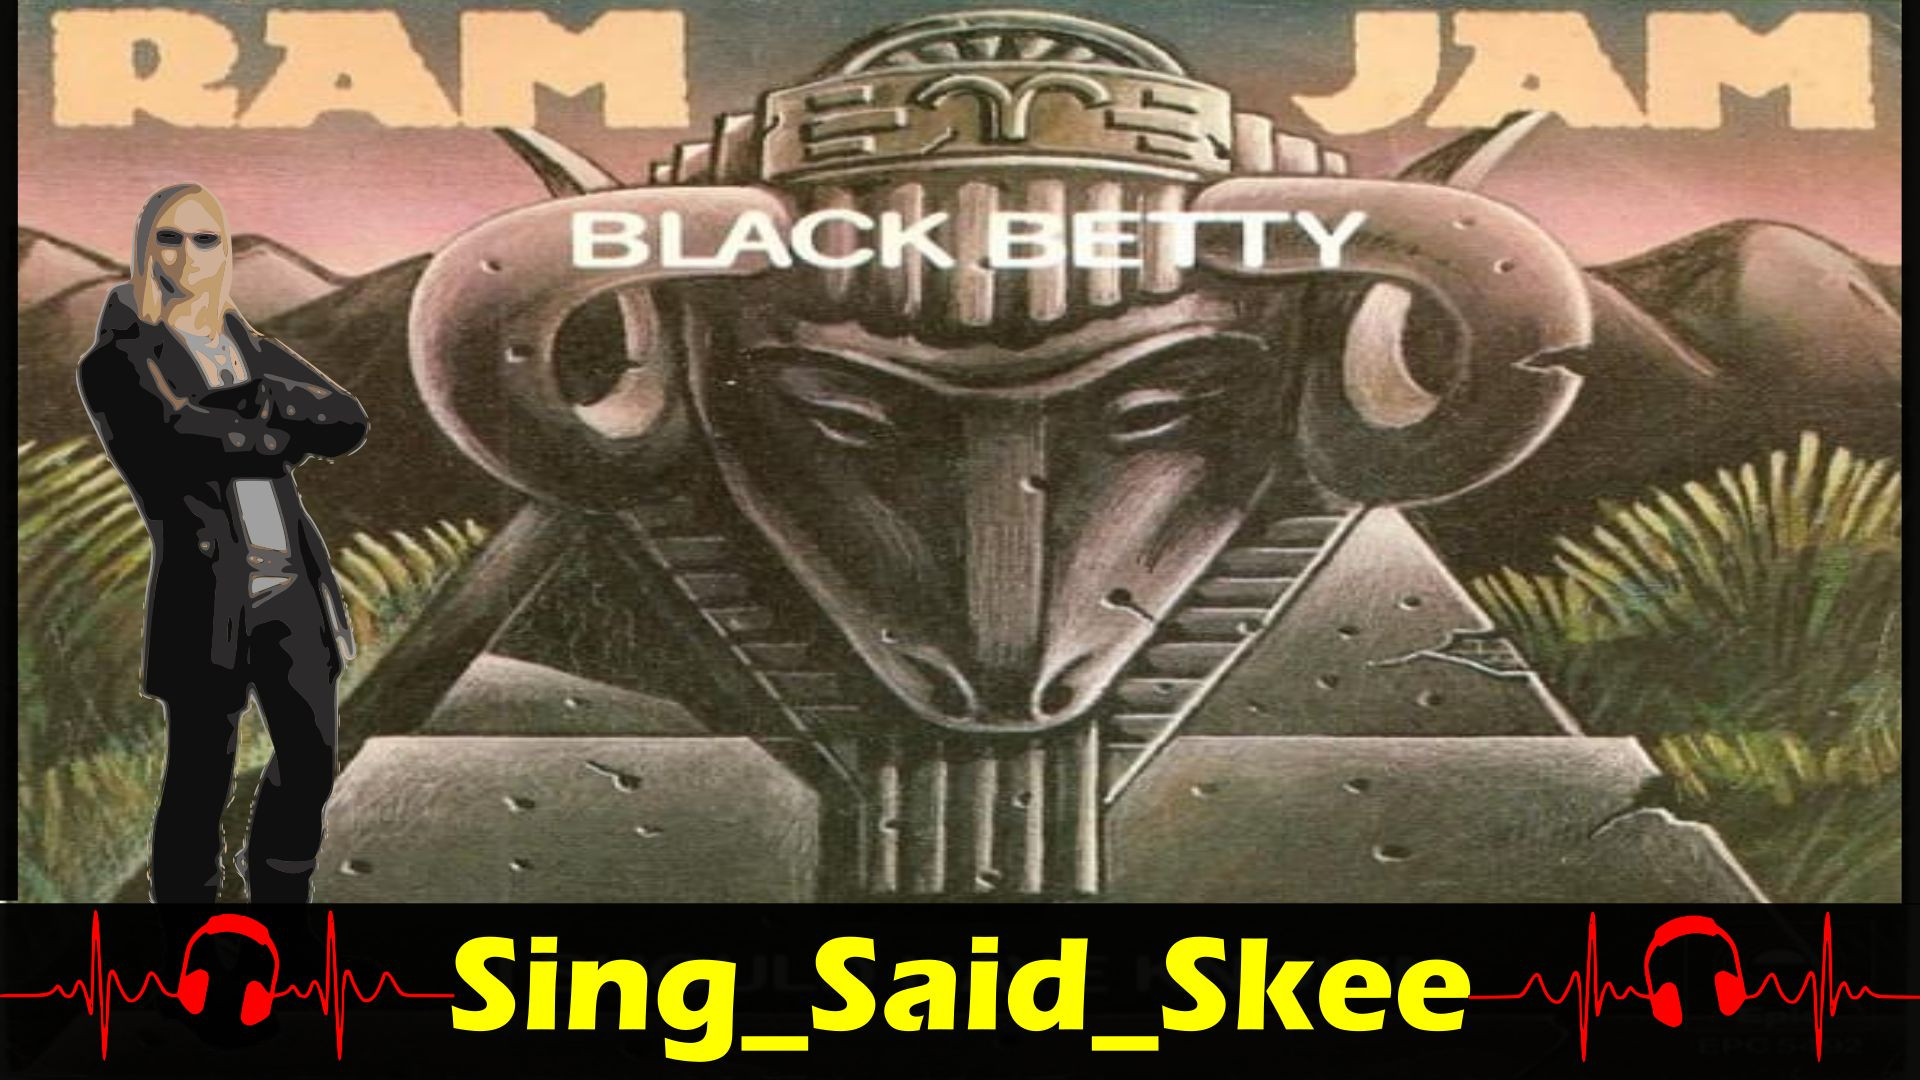 Black Betty - Ram Jam - Sing_Said_Skee